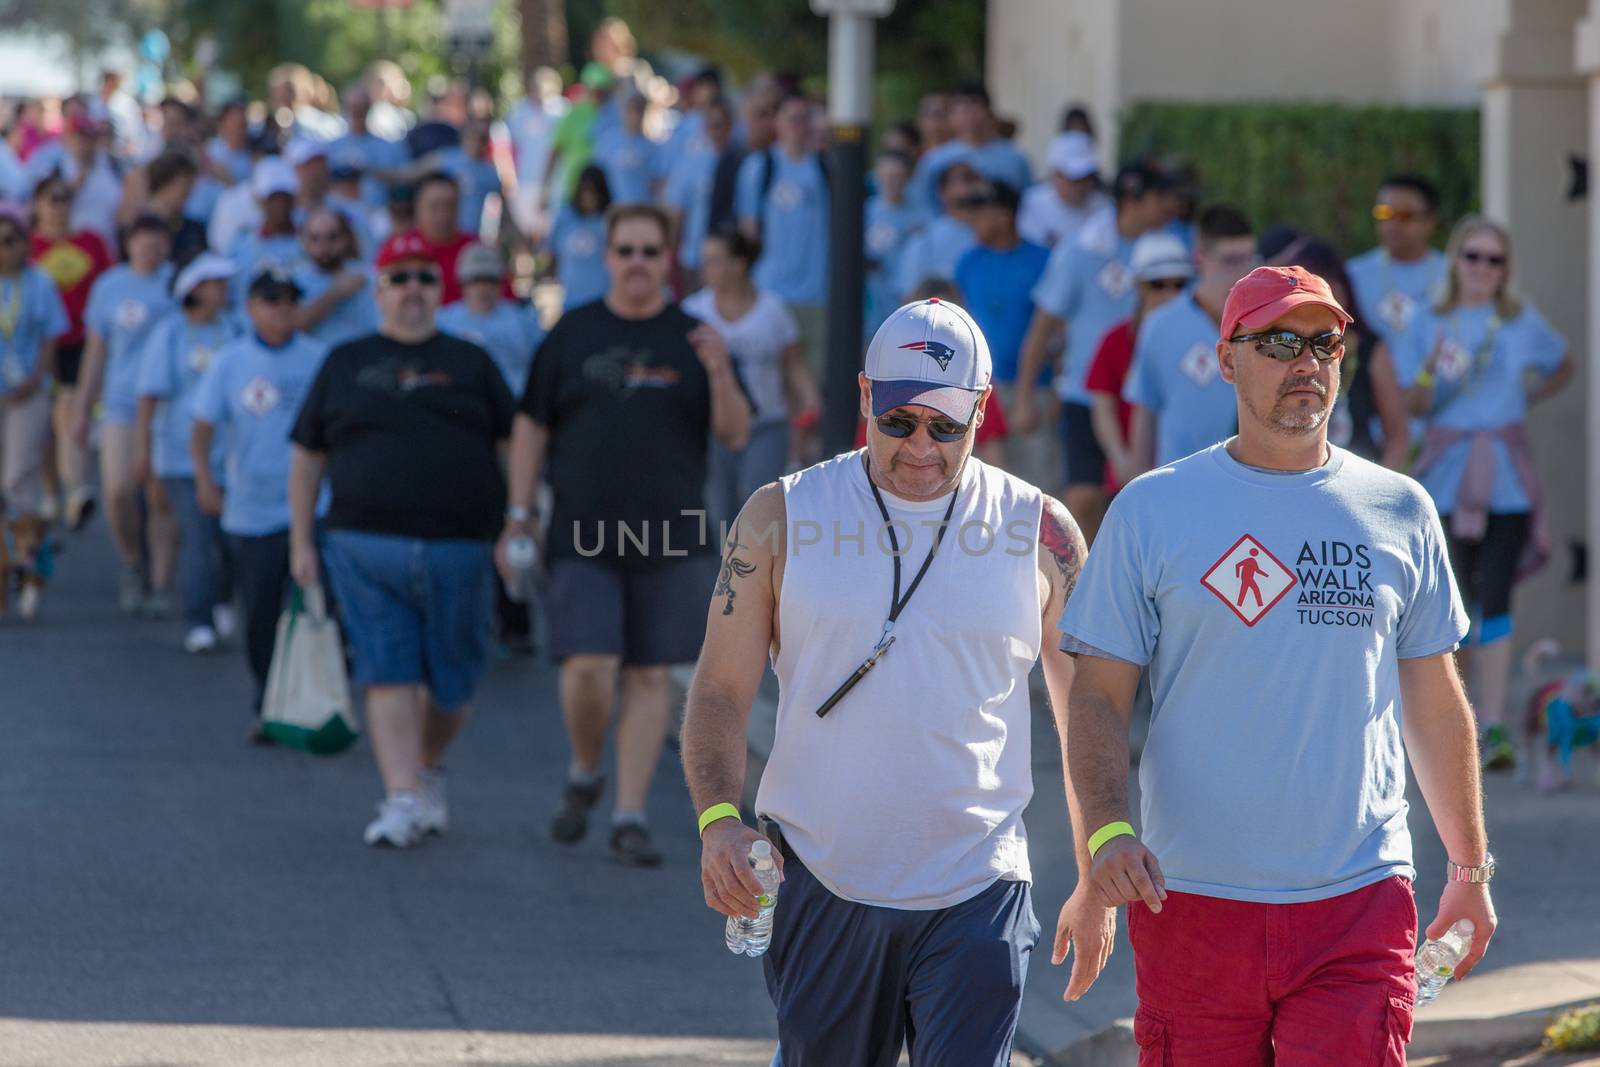 TUCSON, AZ/USA - OCTOBER 12:  Walkers at AIDSwalk on October 12, 2014 in Tucson, Arizona, USA.